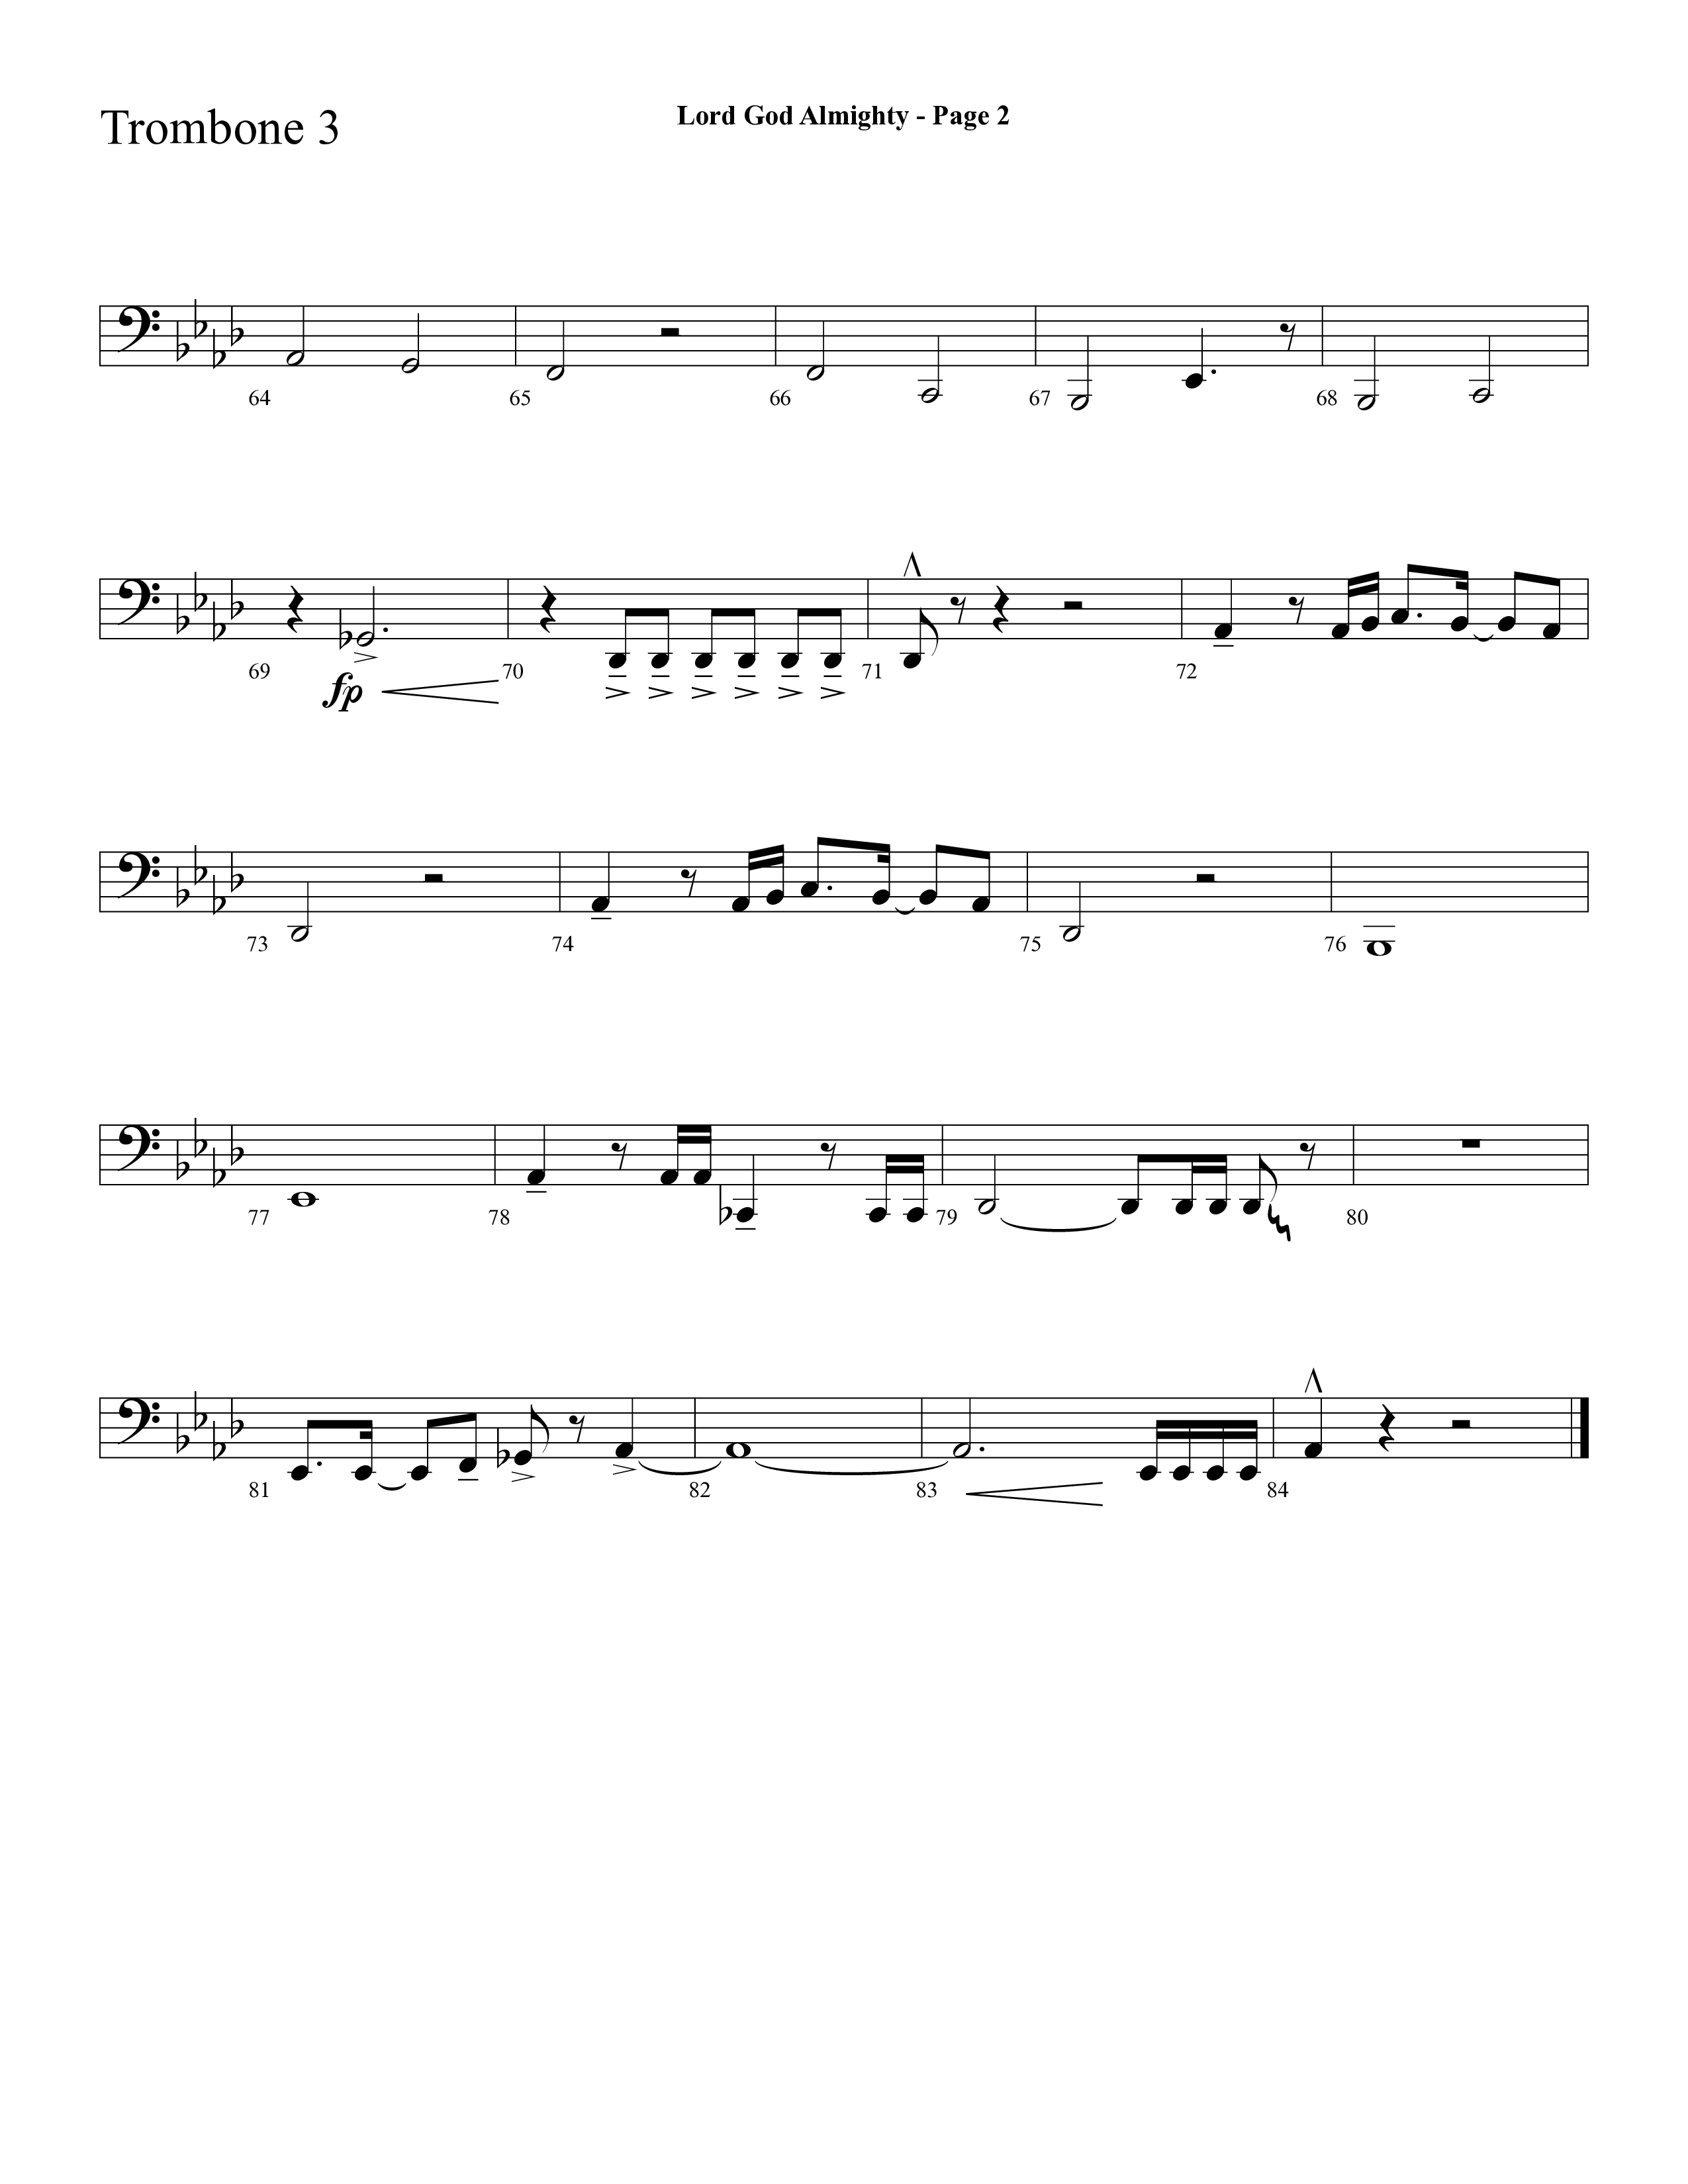 Lord God Almighty (Choral Anthem SATB) Trombone 3 (Lifeway Choral / Arr. Dave Williamson)